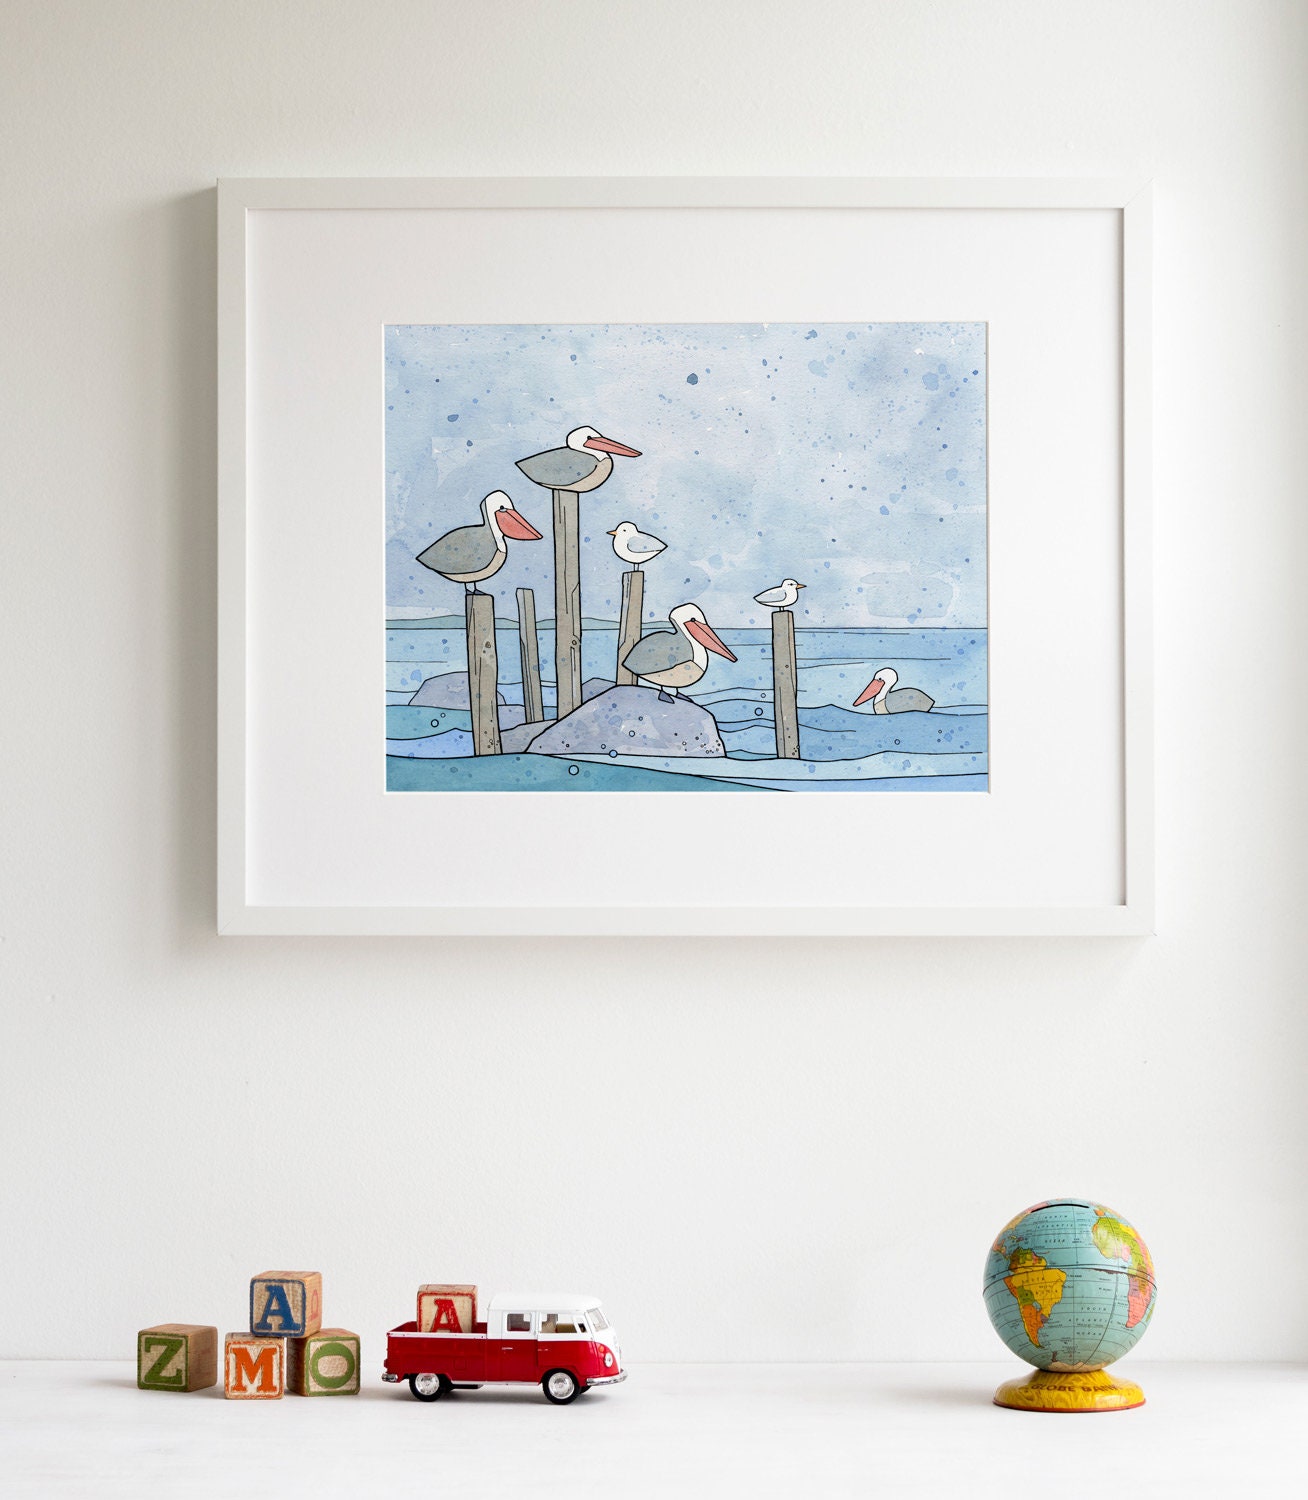 Pelicans in Rain Art Print, Coastal Nursery Wall Art, Ink and Watercolor Bird Illustration